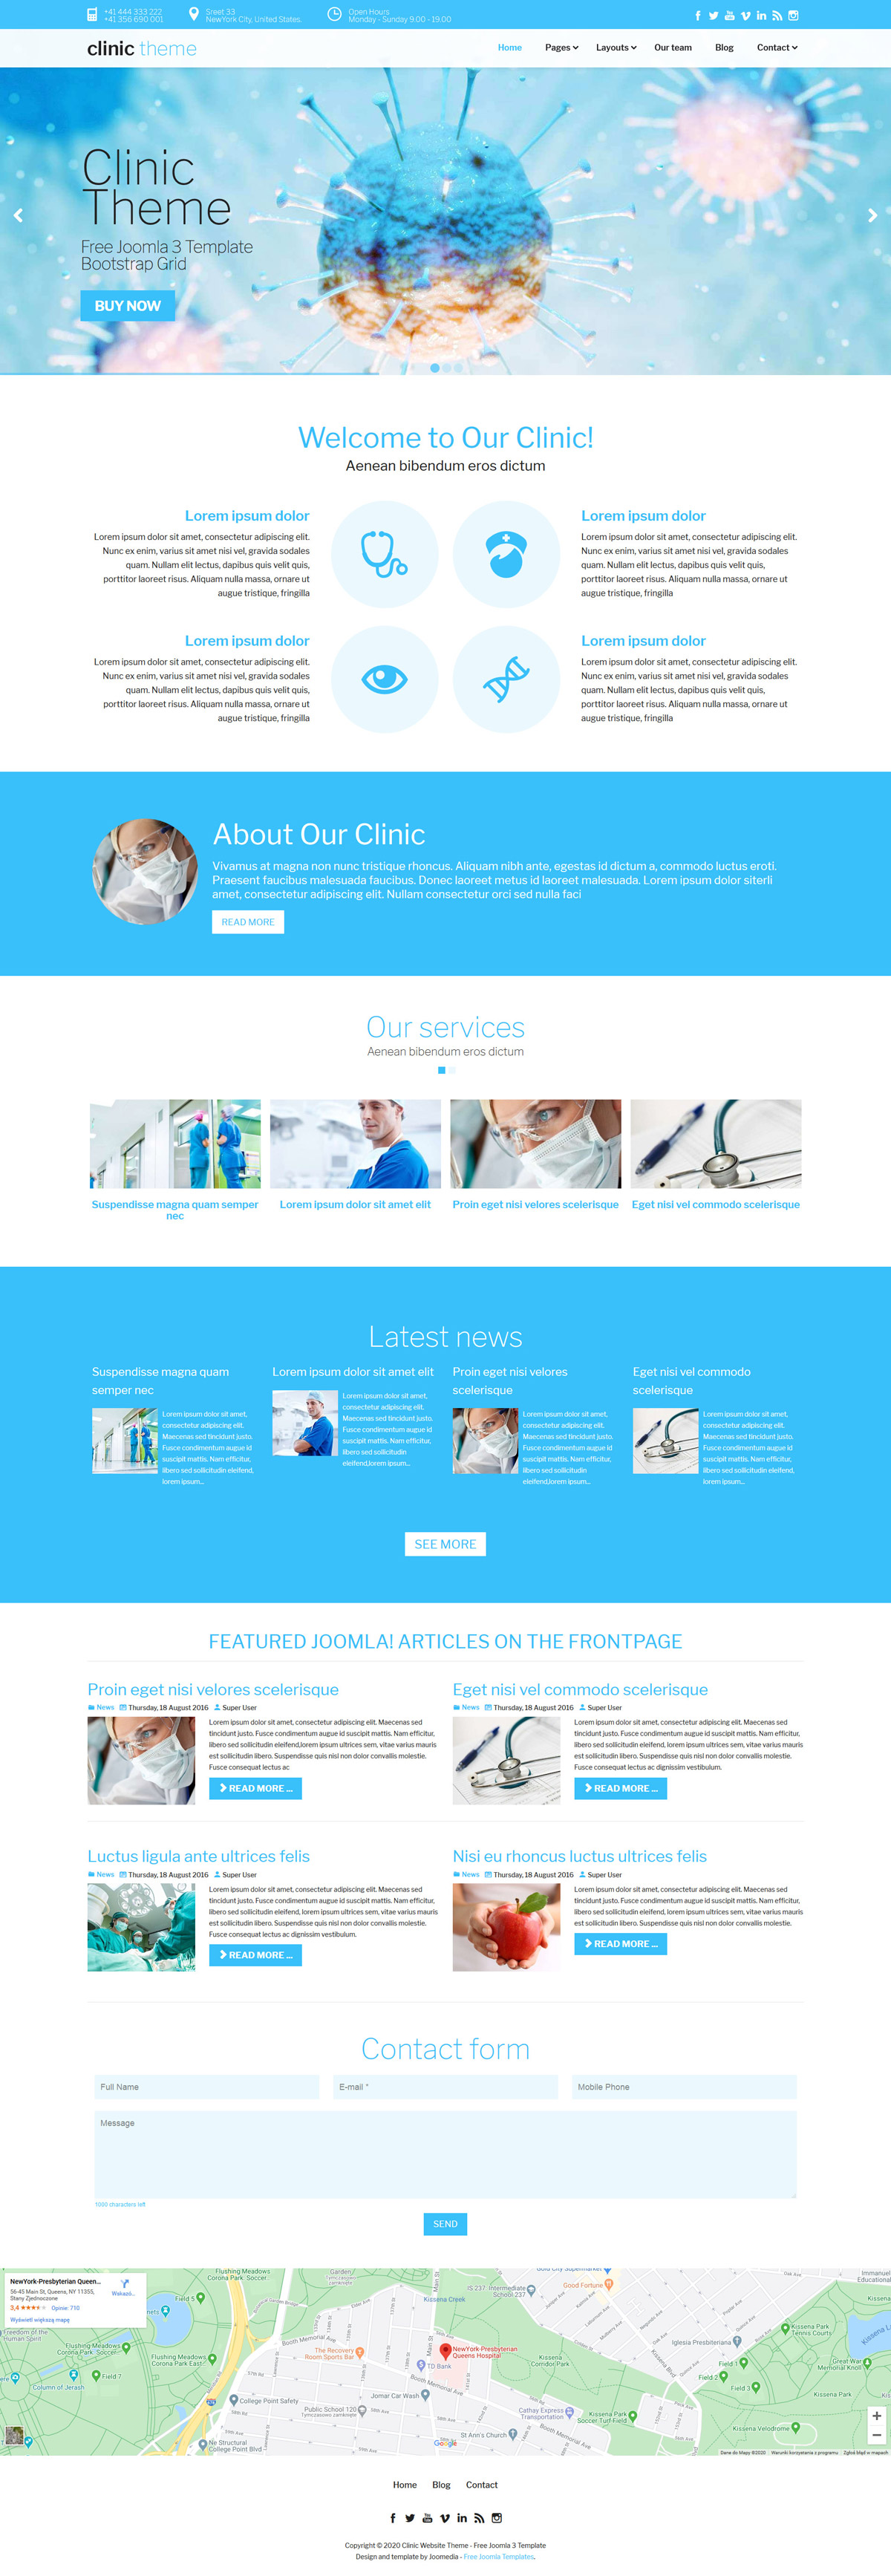 Clinic Theme Medical Clinics, Doctors, Hospitals, Healthcare Services Website Joomla Template Quickstart Frontpage showcase